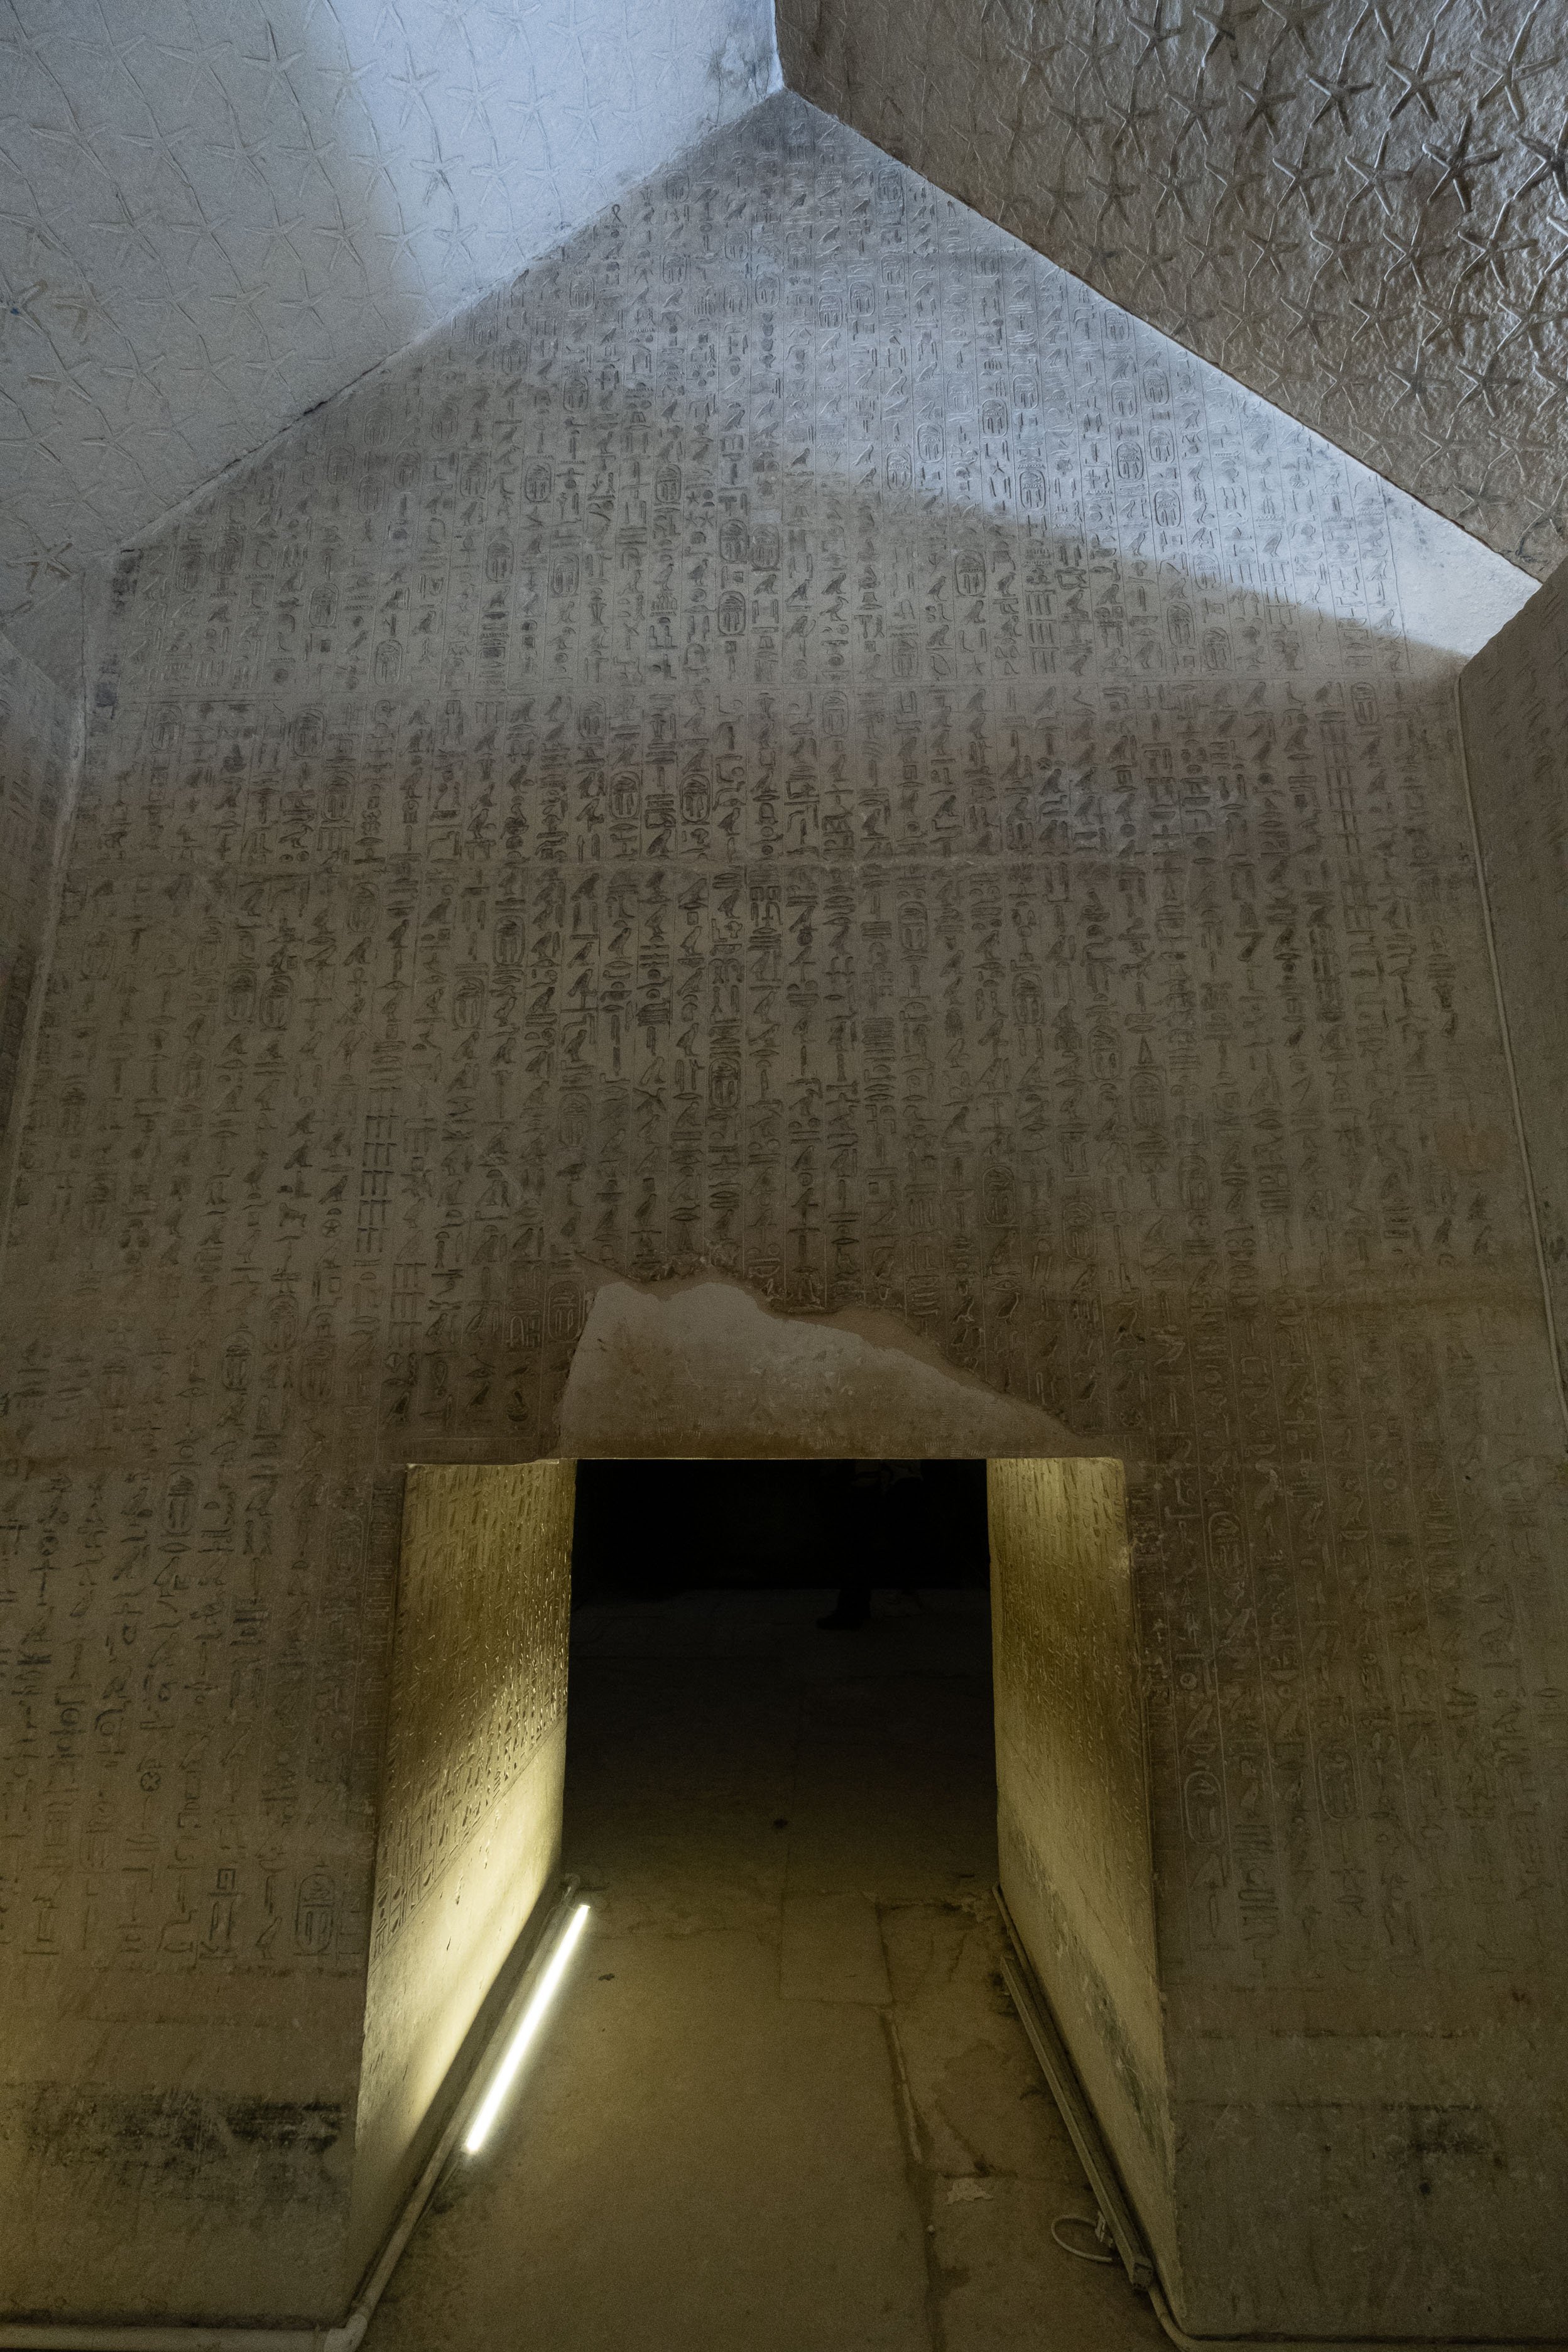 Inside the Pyramid of Unas